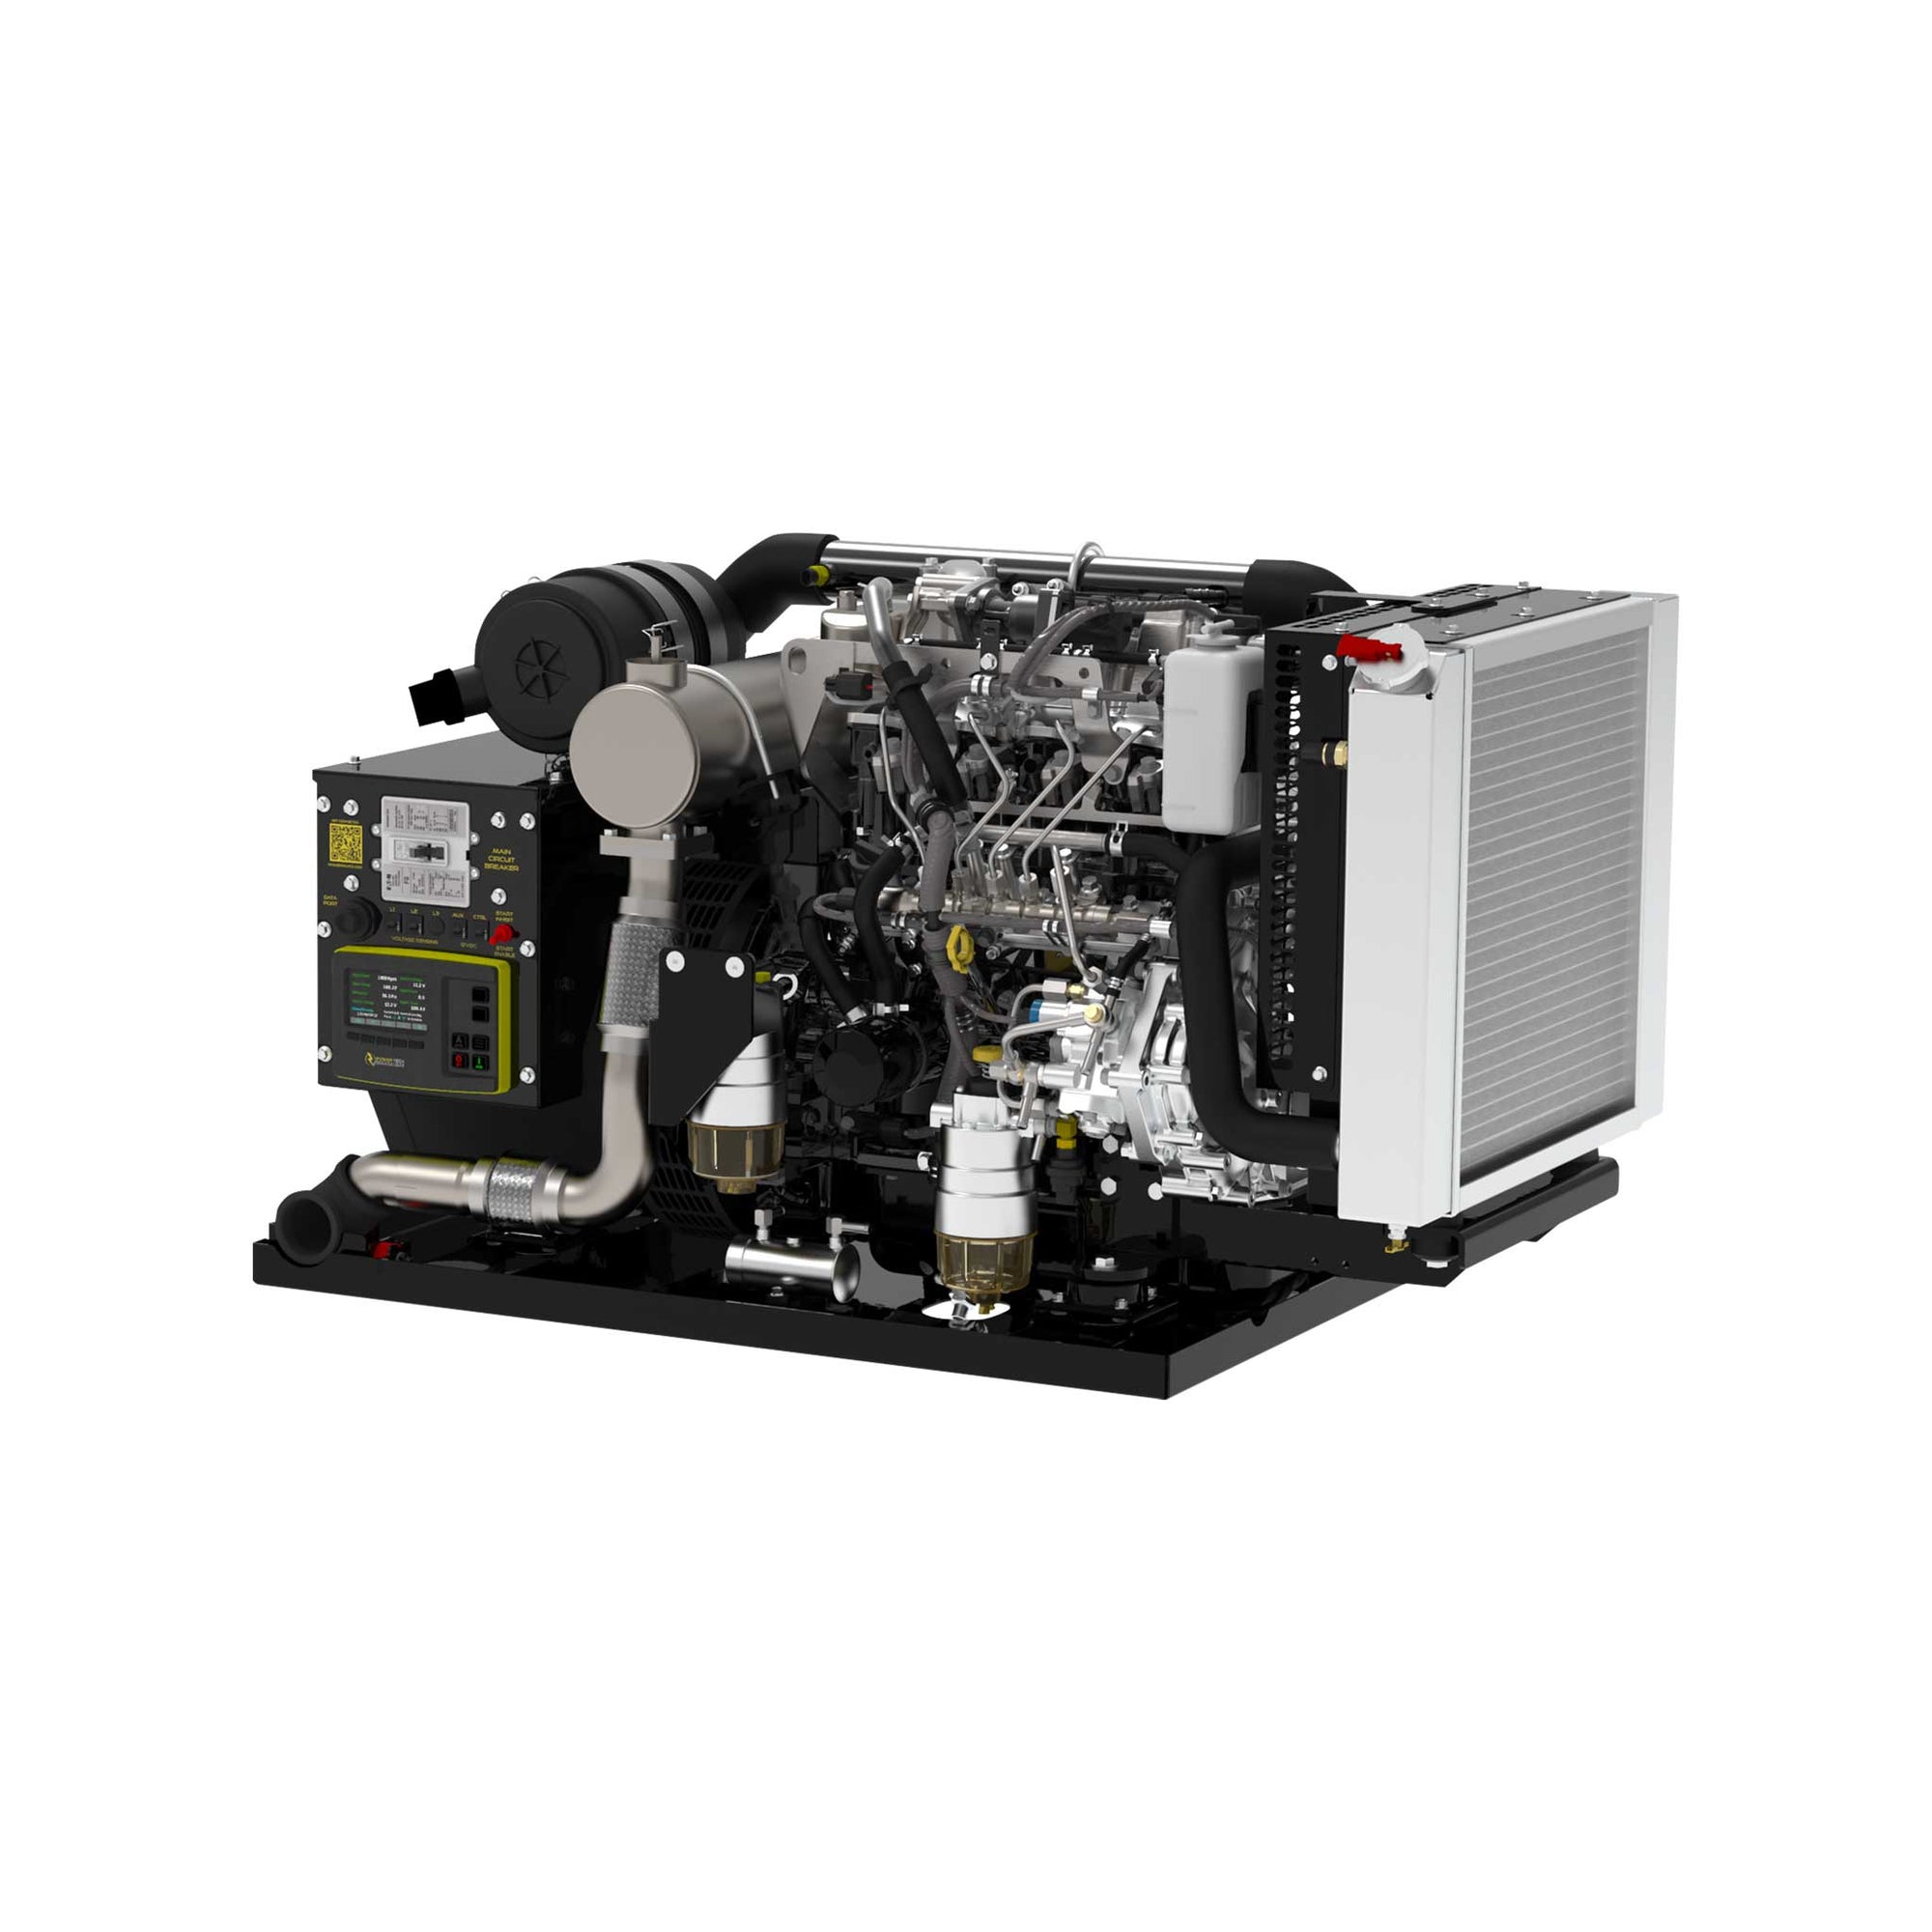 15,000 watt commercial diesel generator